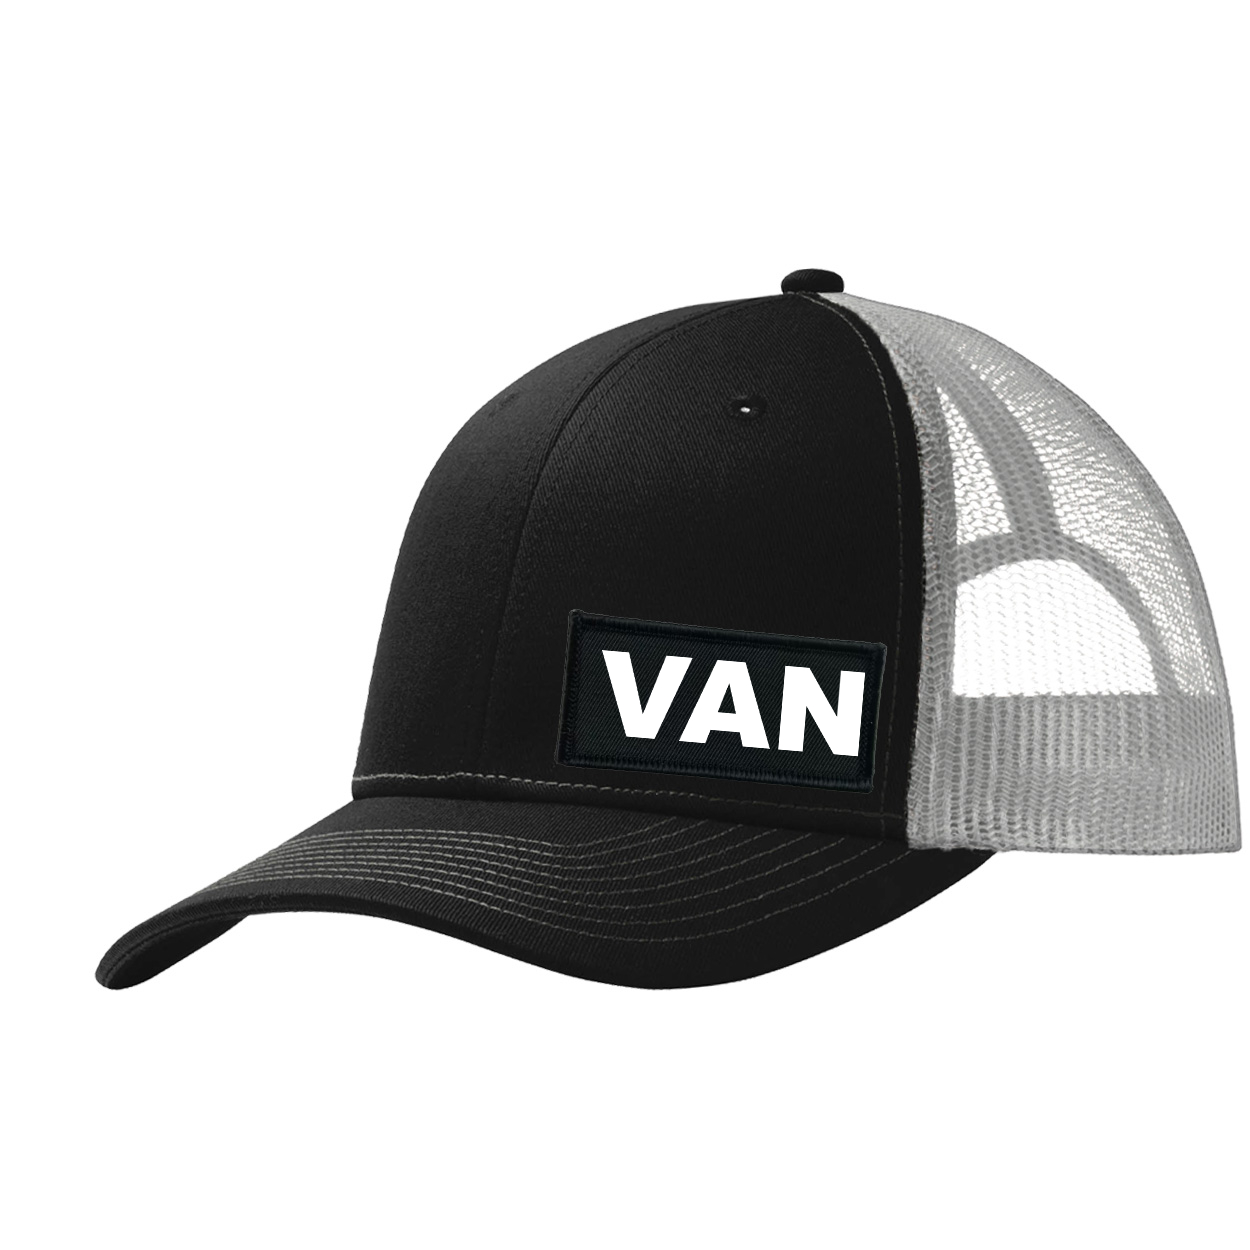 Van Brand Logo Night Out Woven Patch Snapback Trucker Hat Black/Gray